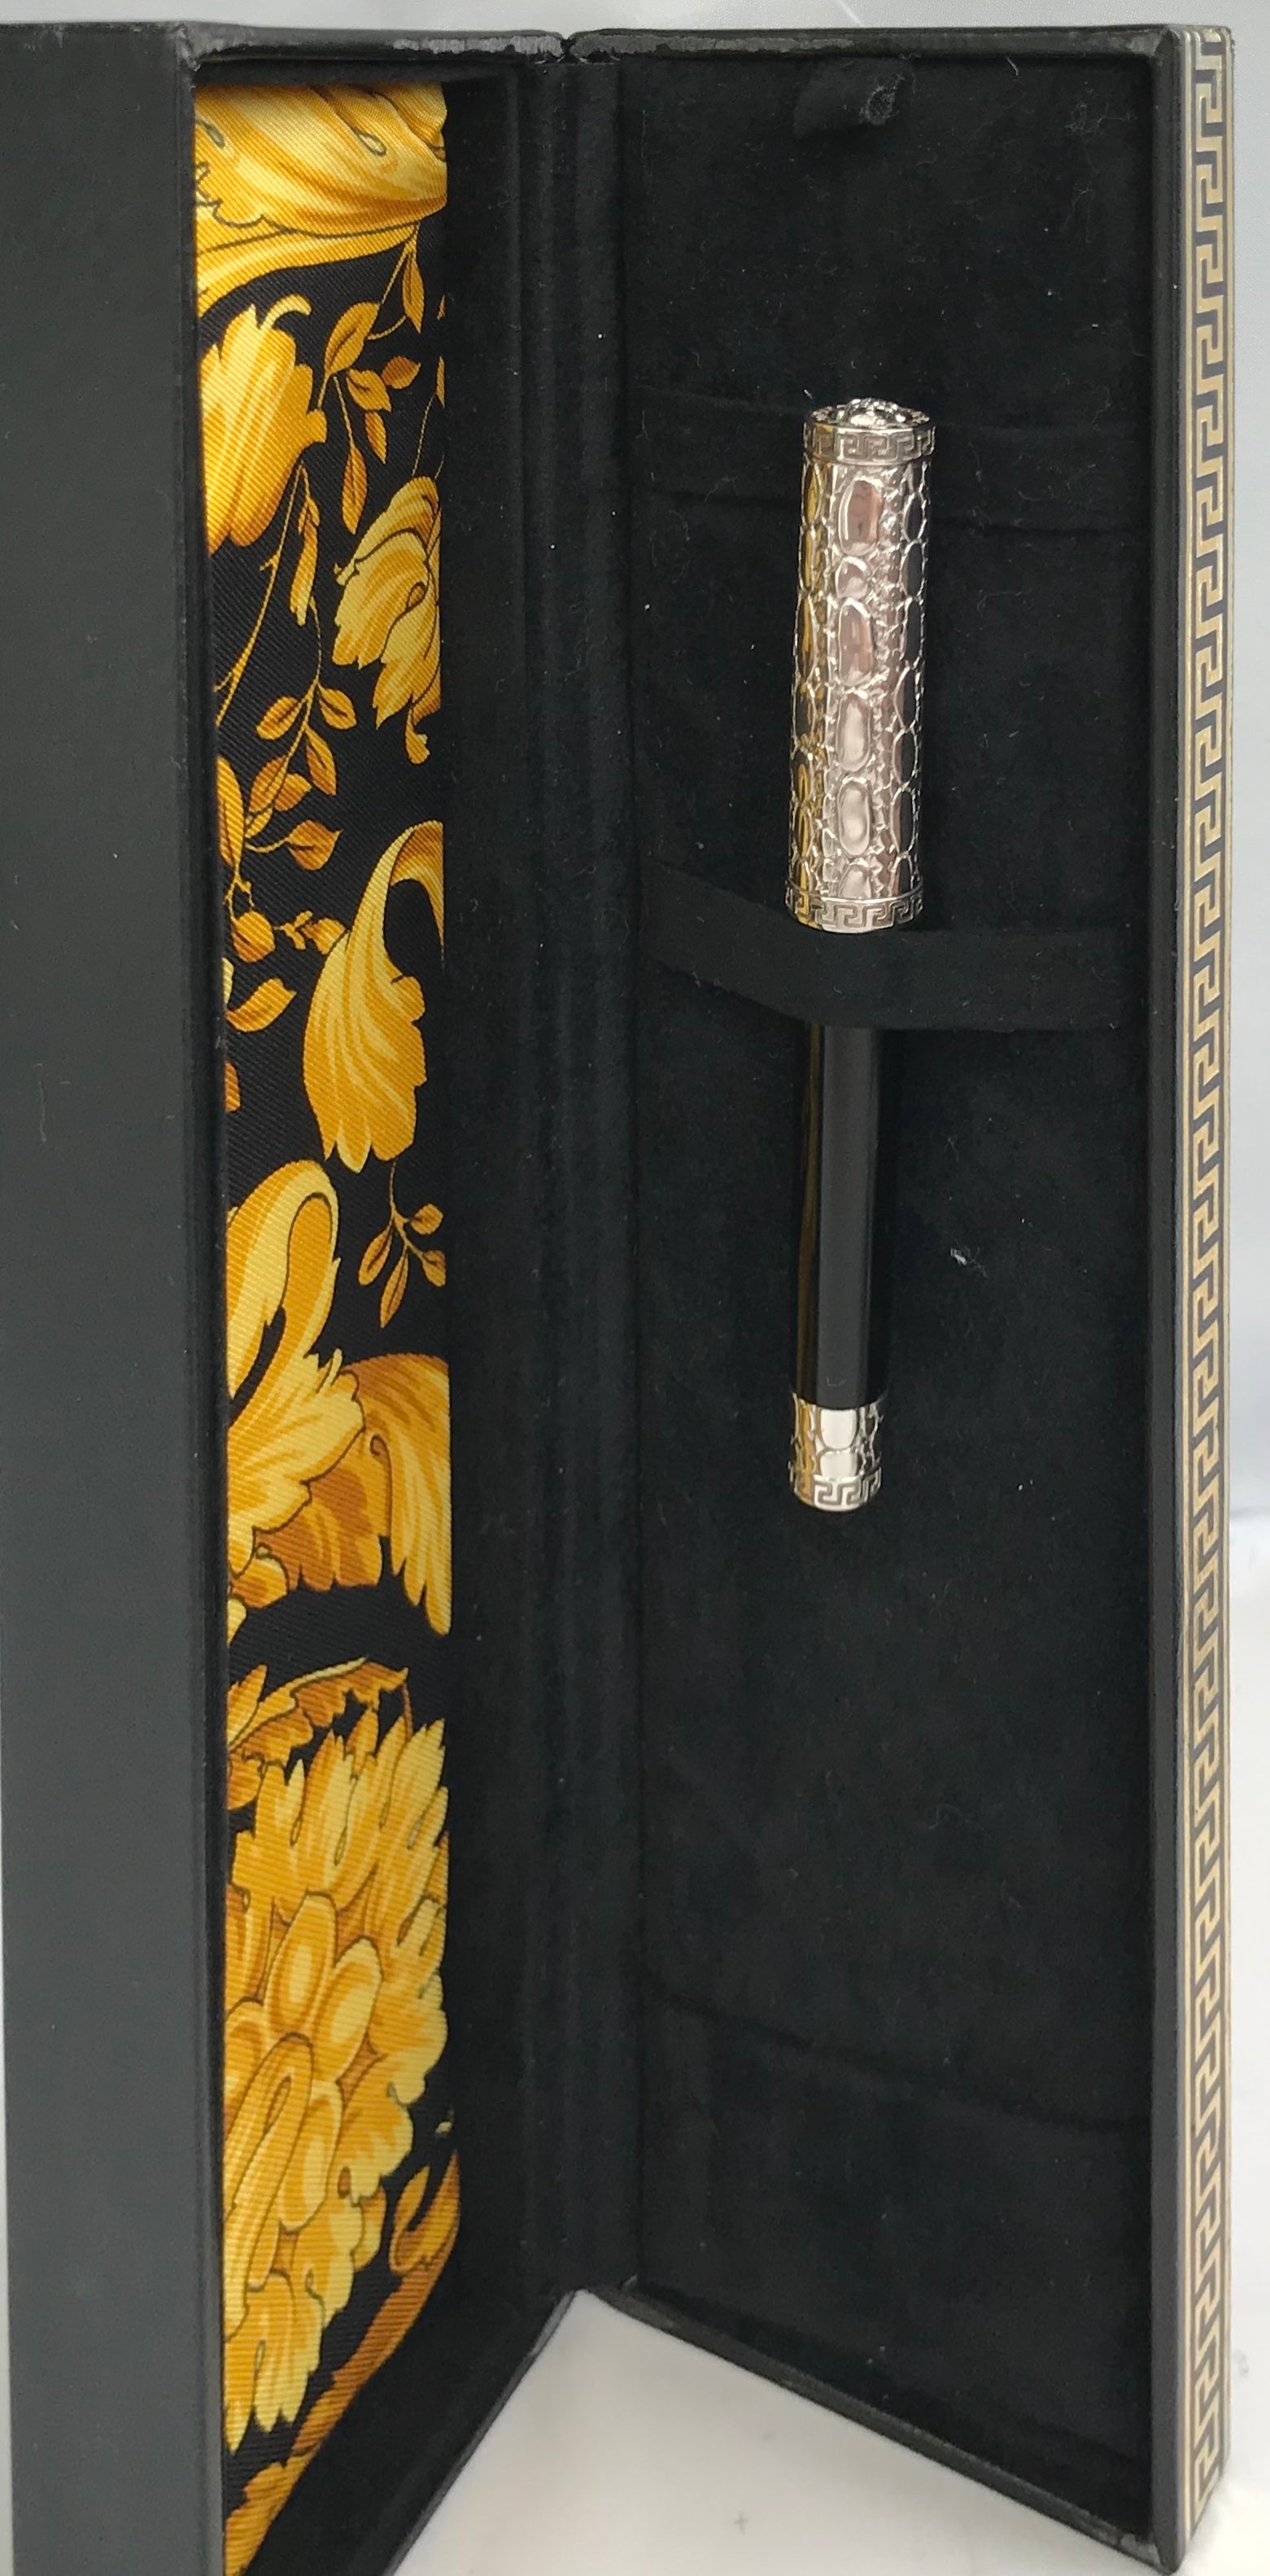 versace cigarette case